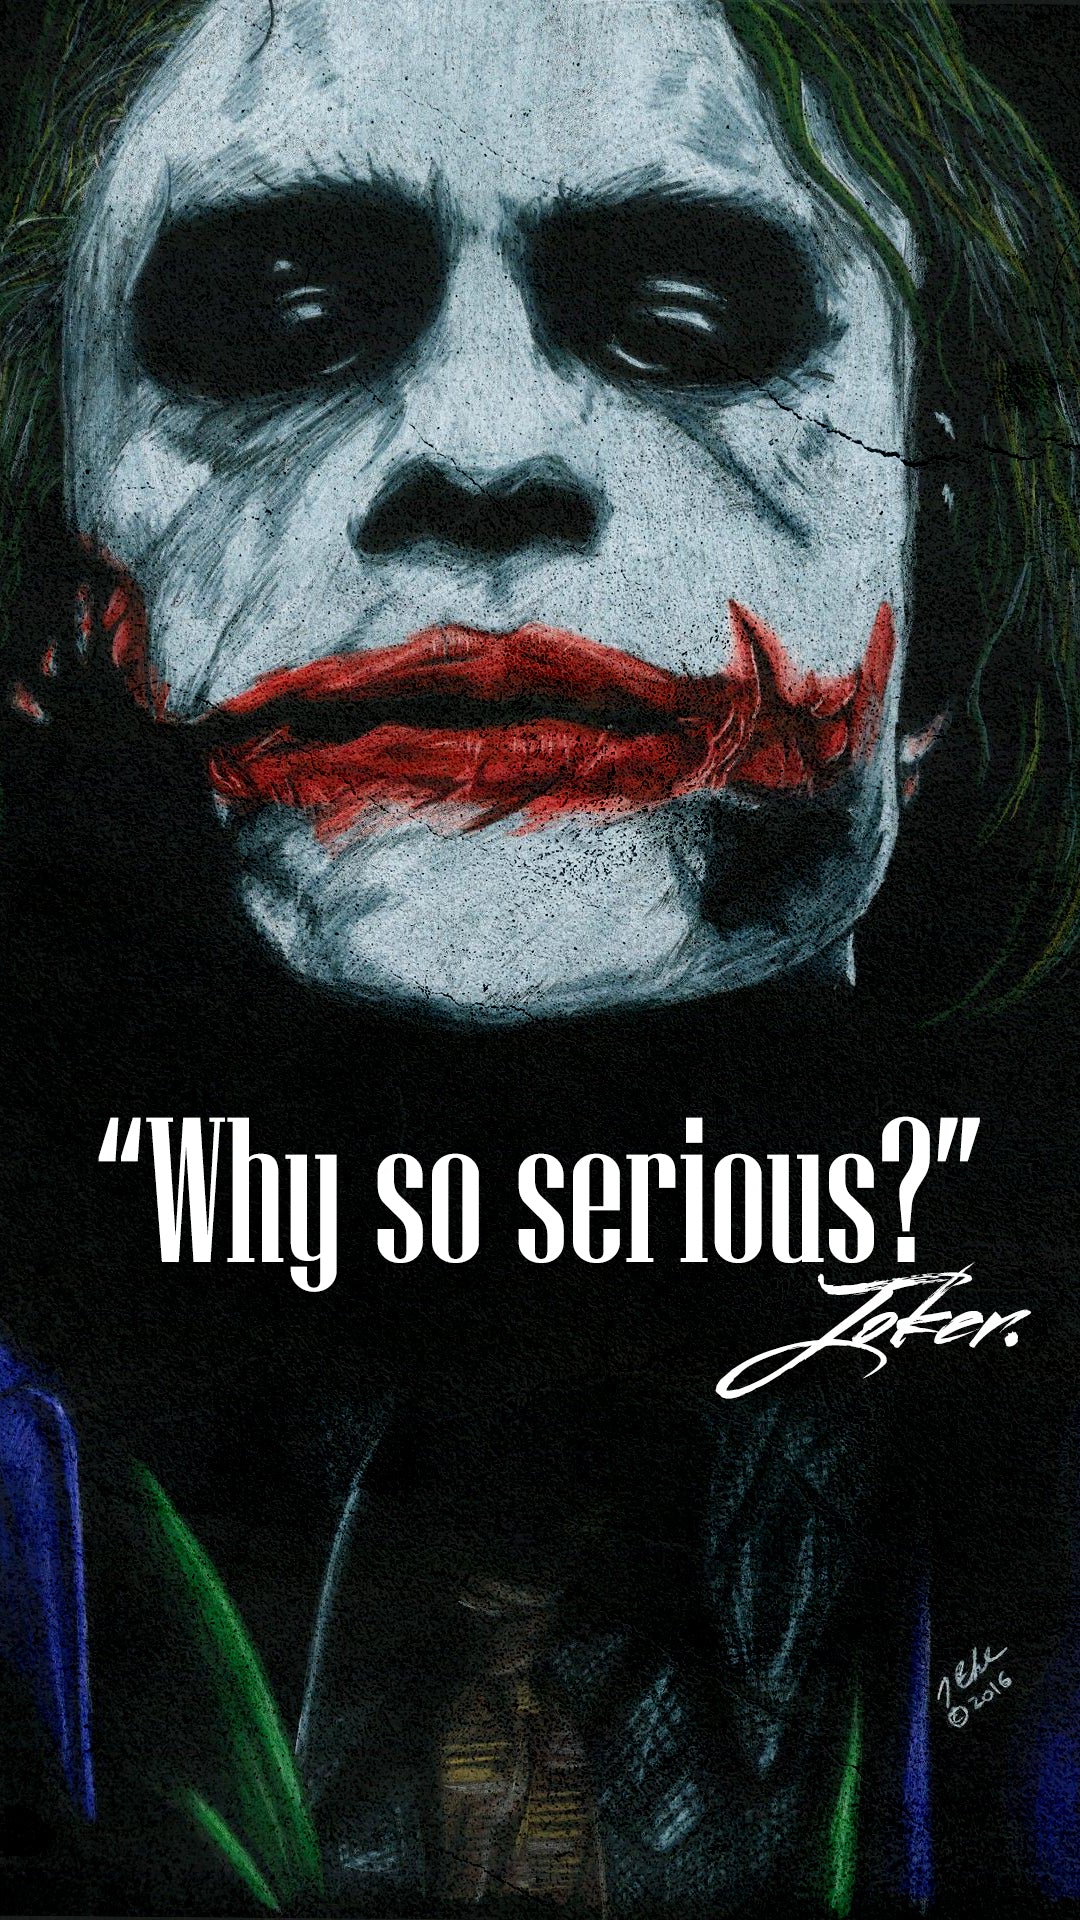 Joker 'Why so Serious Closeup' Poster